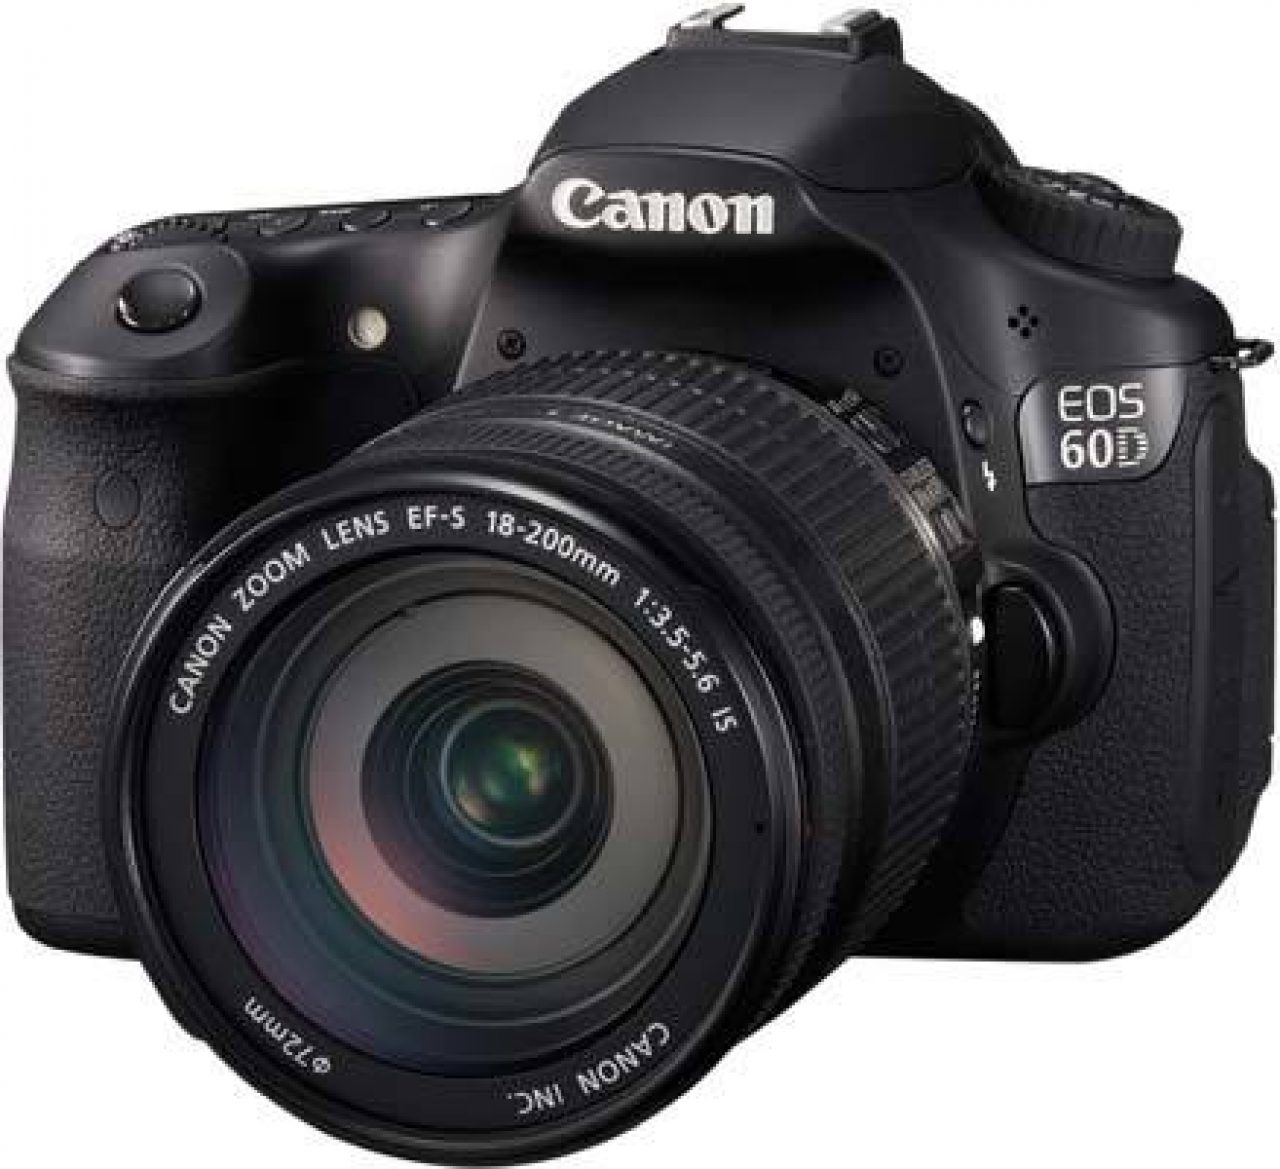 Canon Eos 60d Review Photography Blog, Best Lens For Landscape Photography Canon 60d